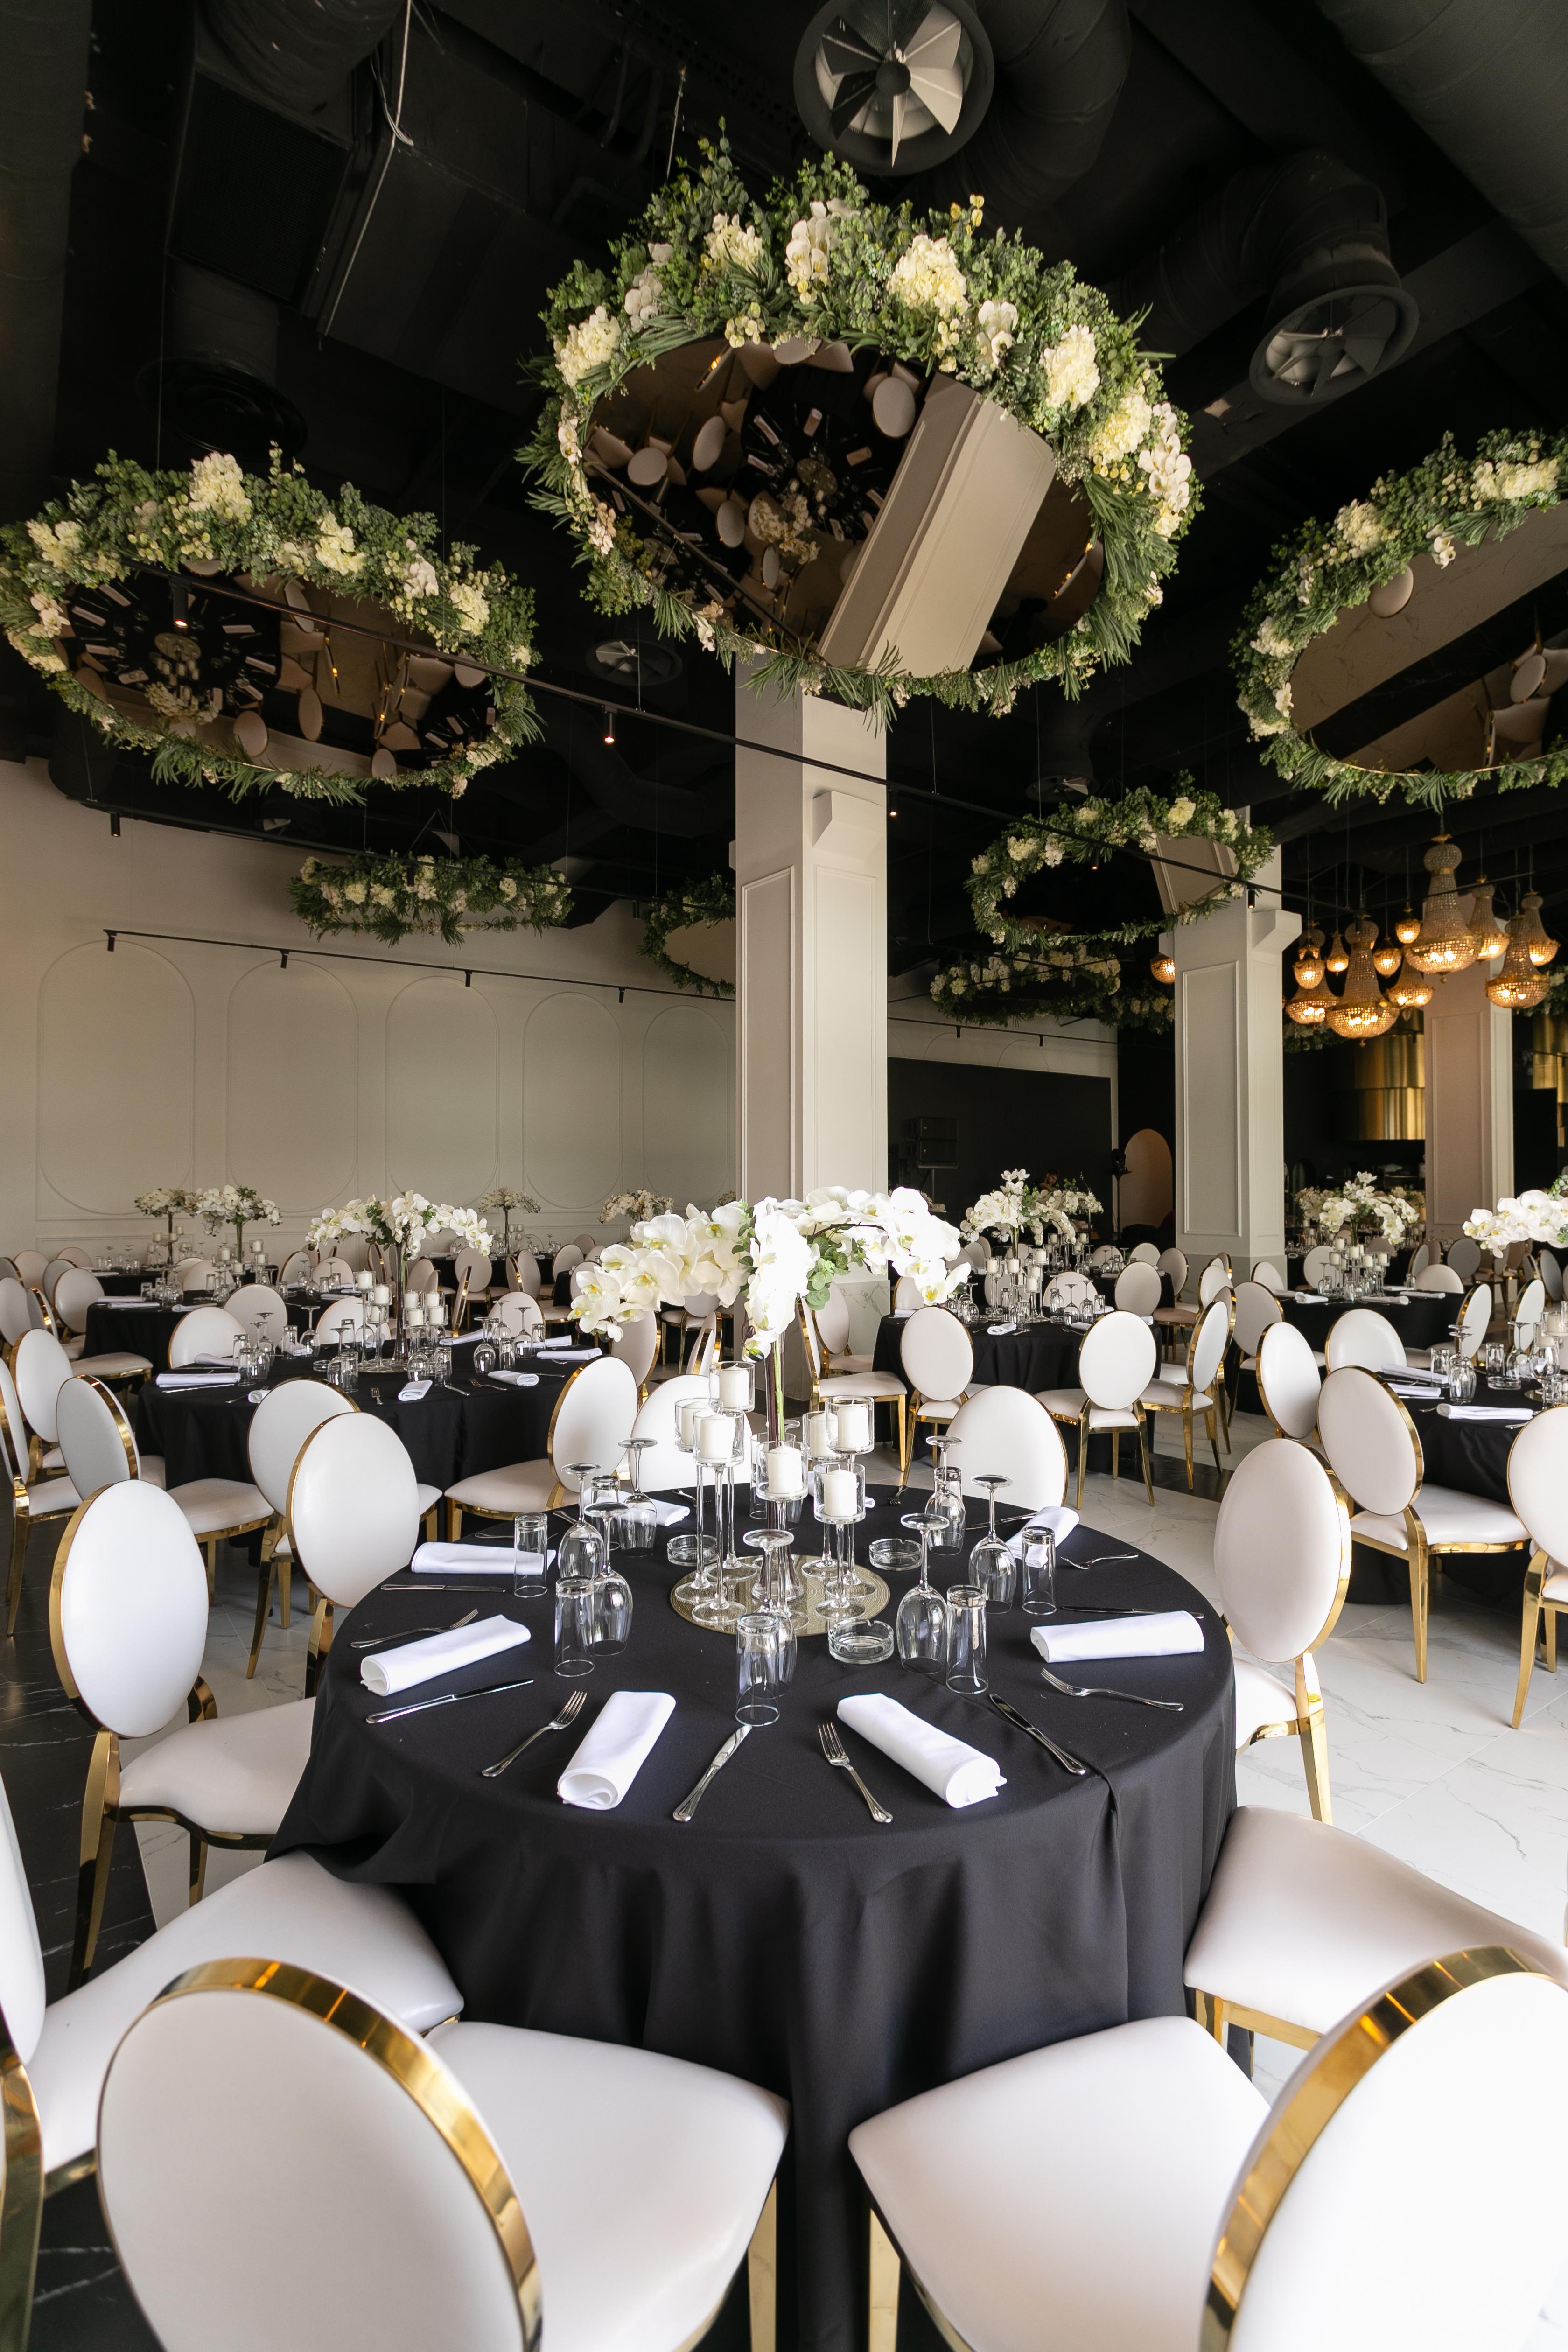 The Dream - restoran beton hala - organizacija venčanja